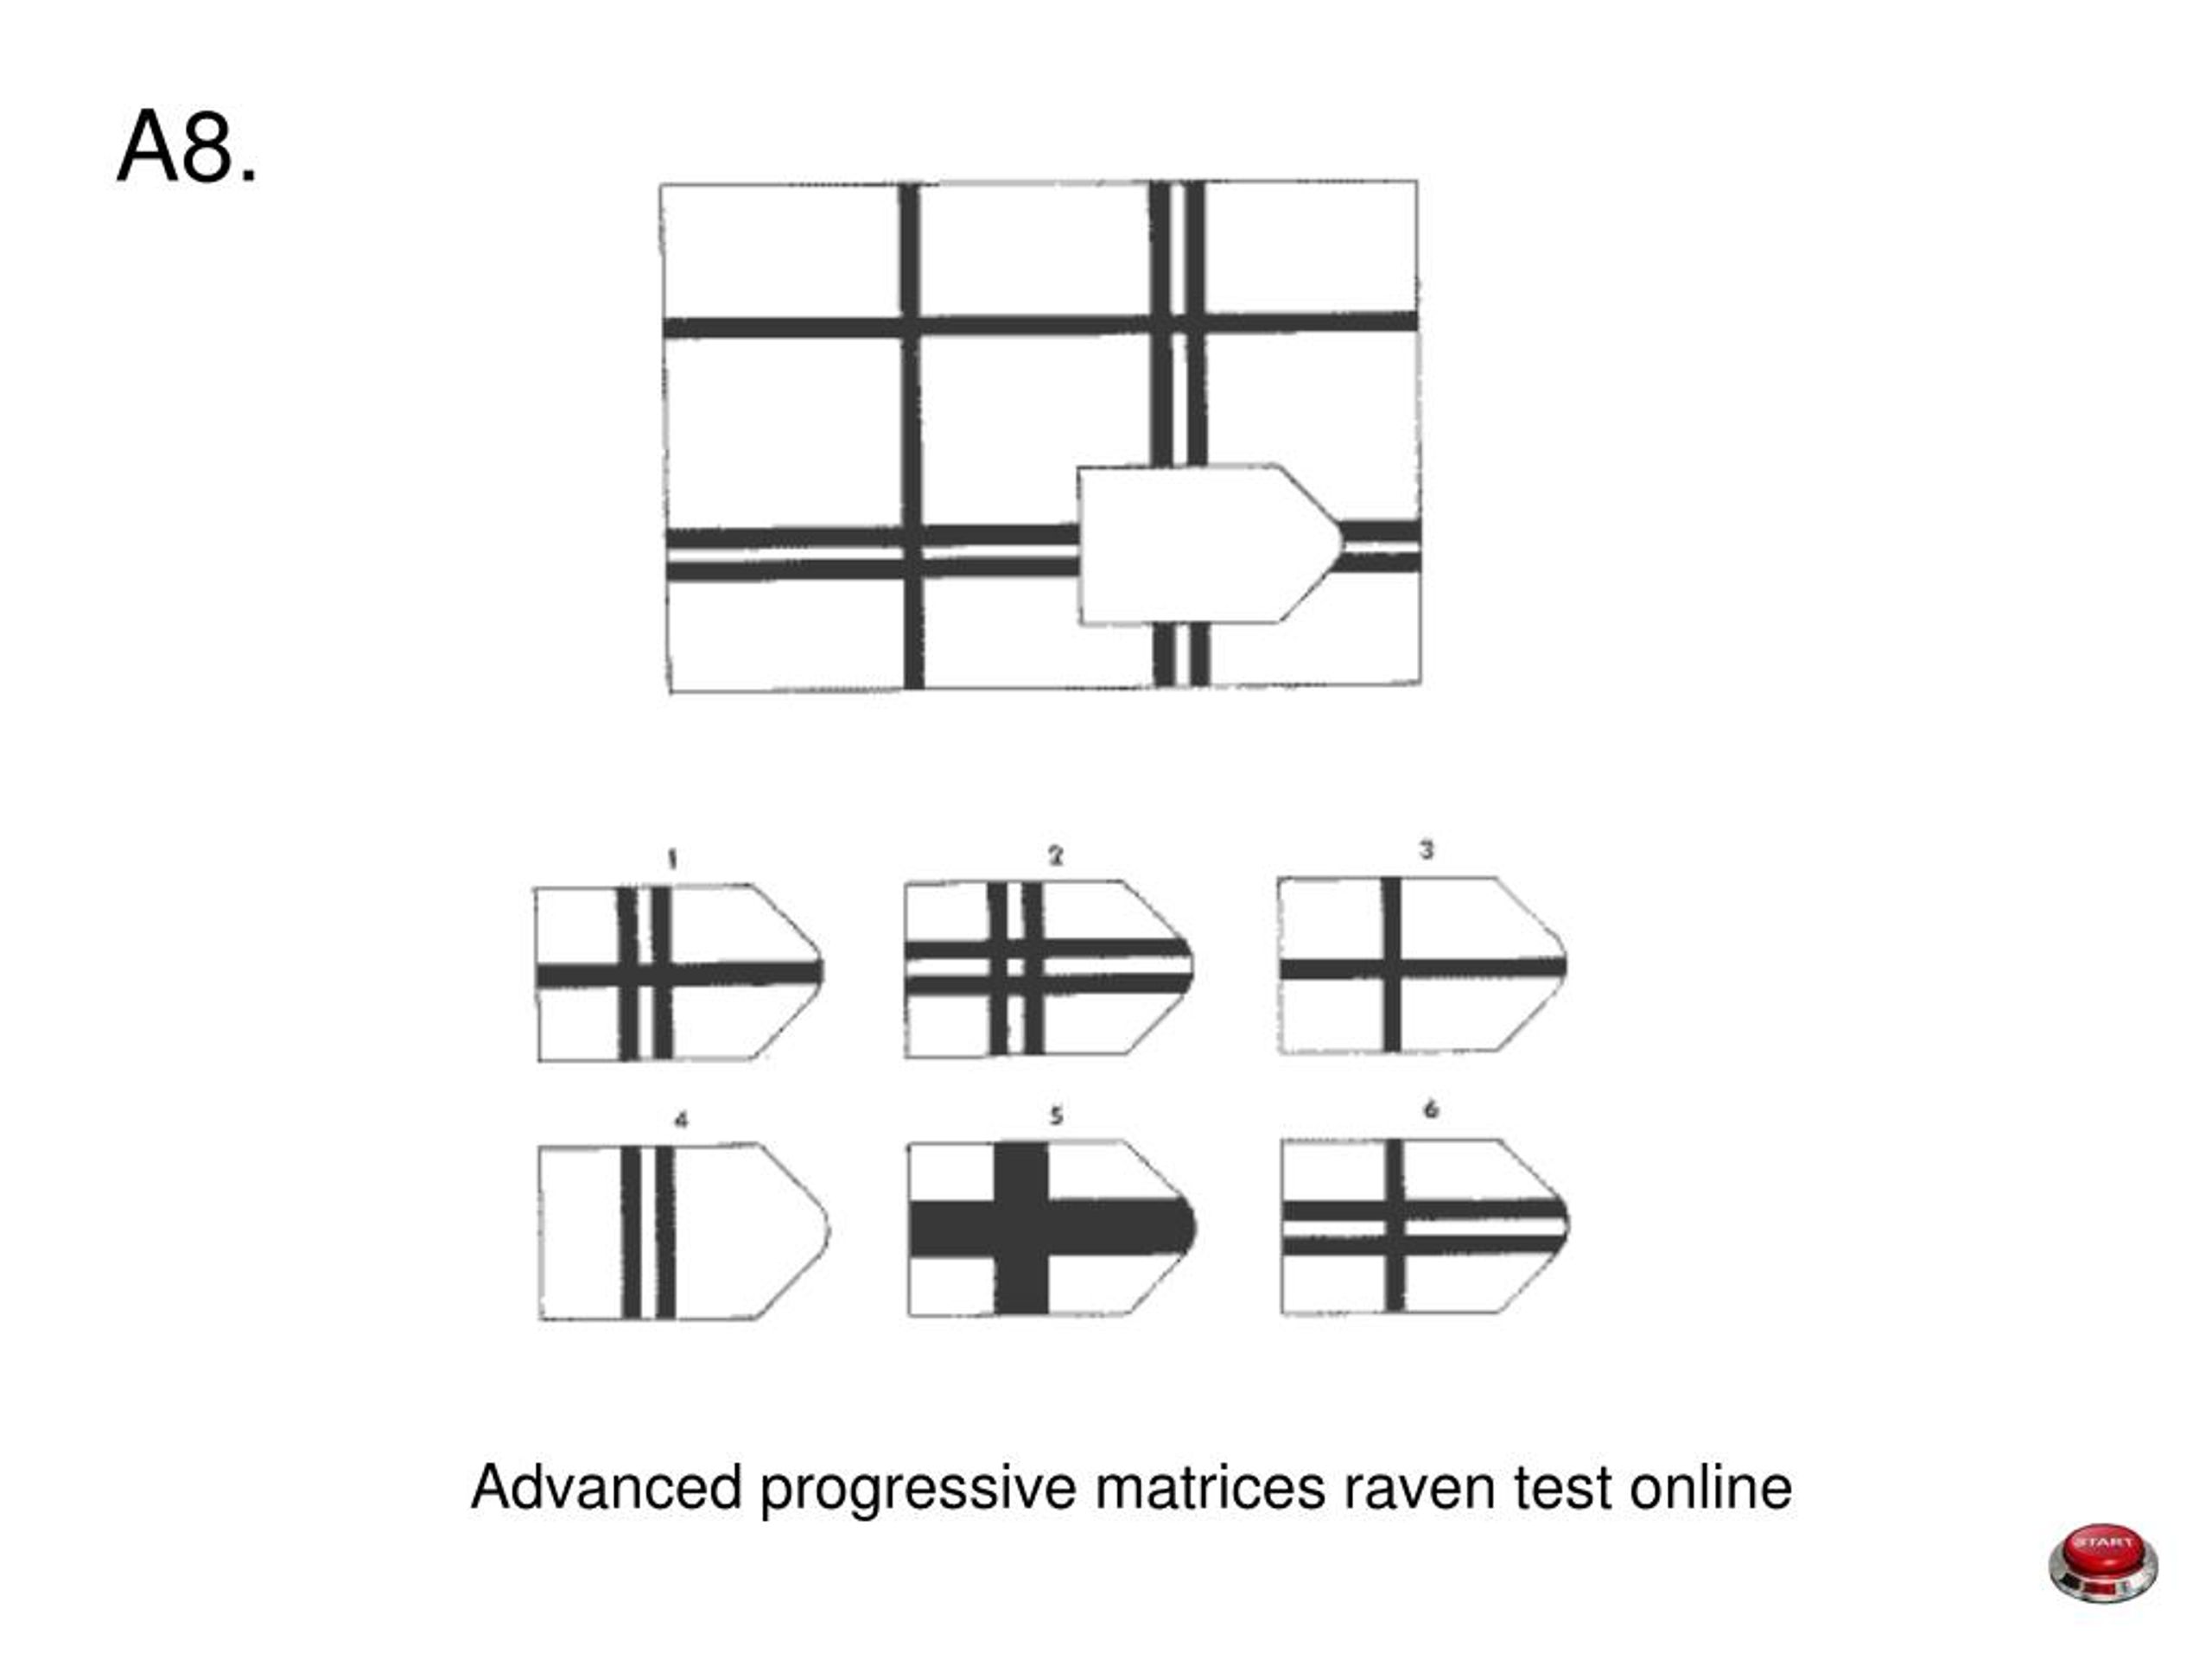 Advanced progressive matrices raven test online.